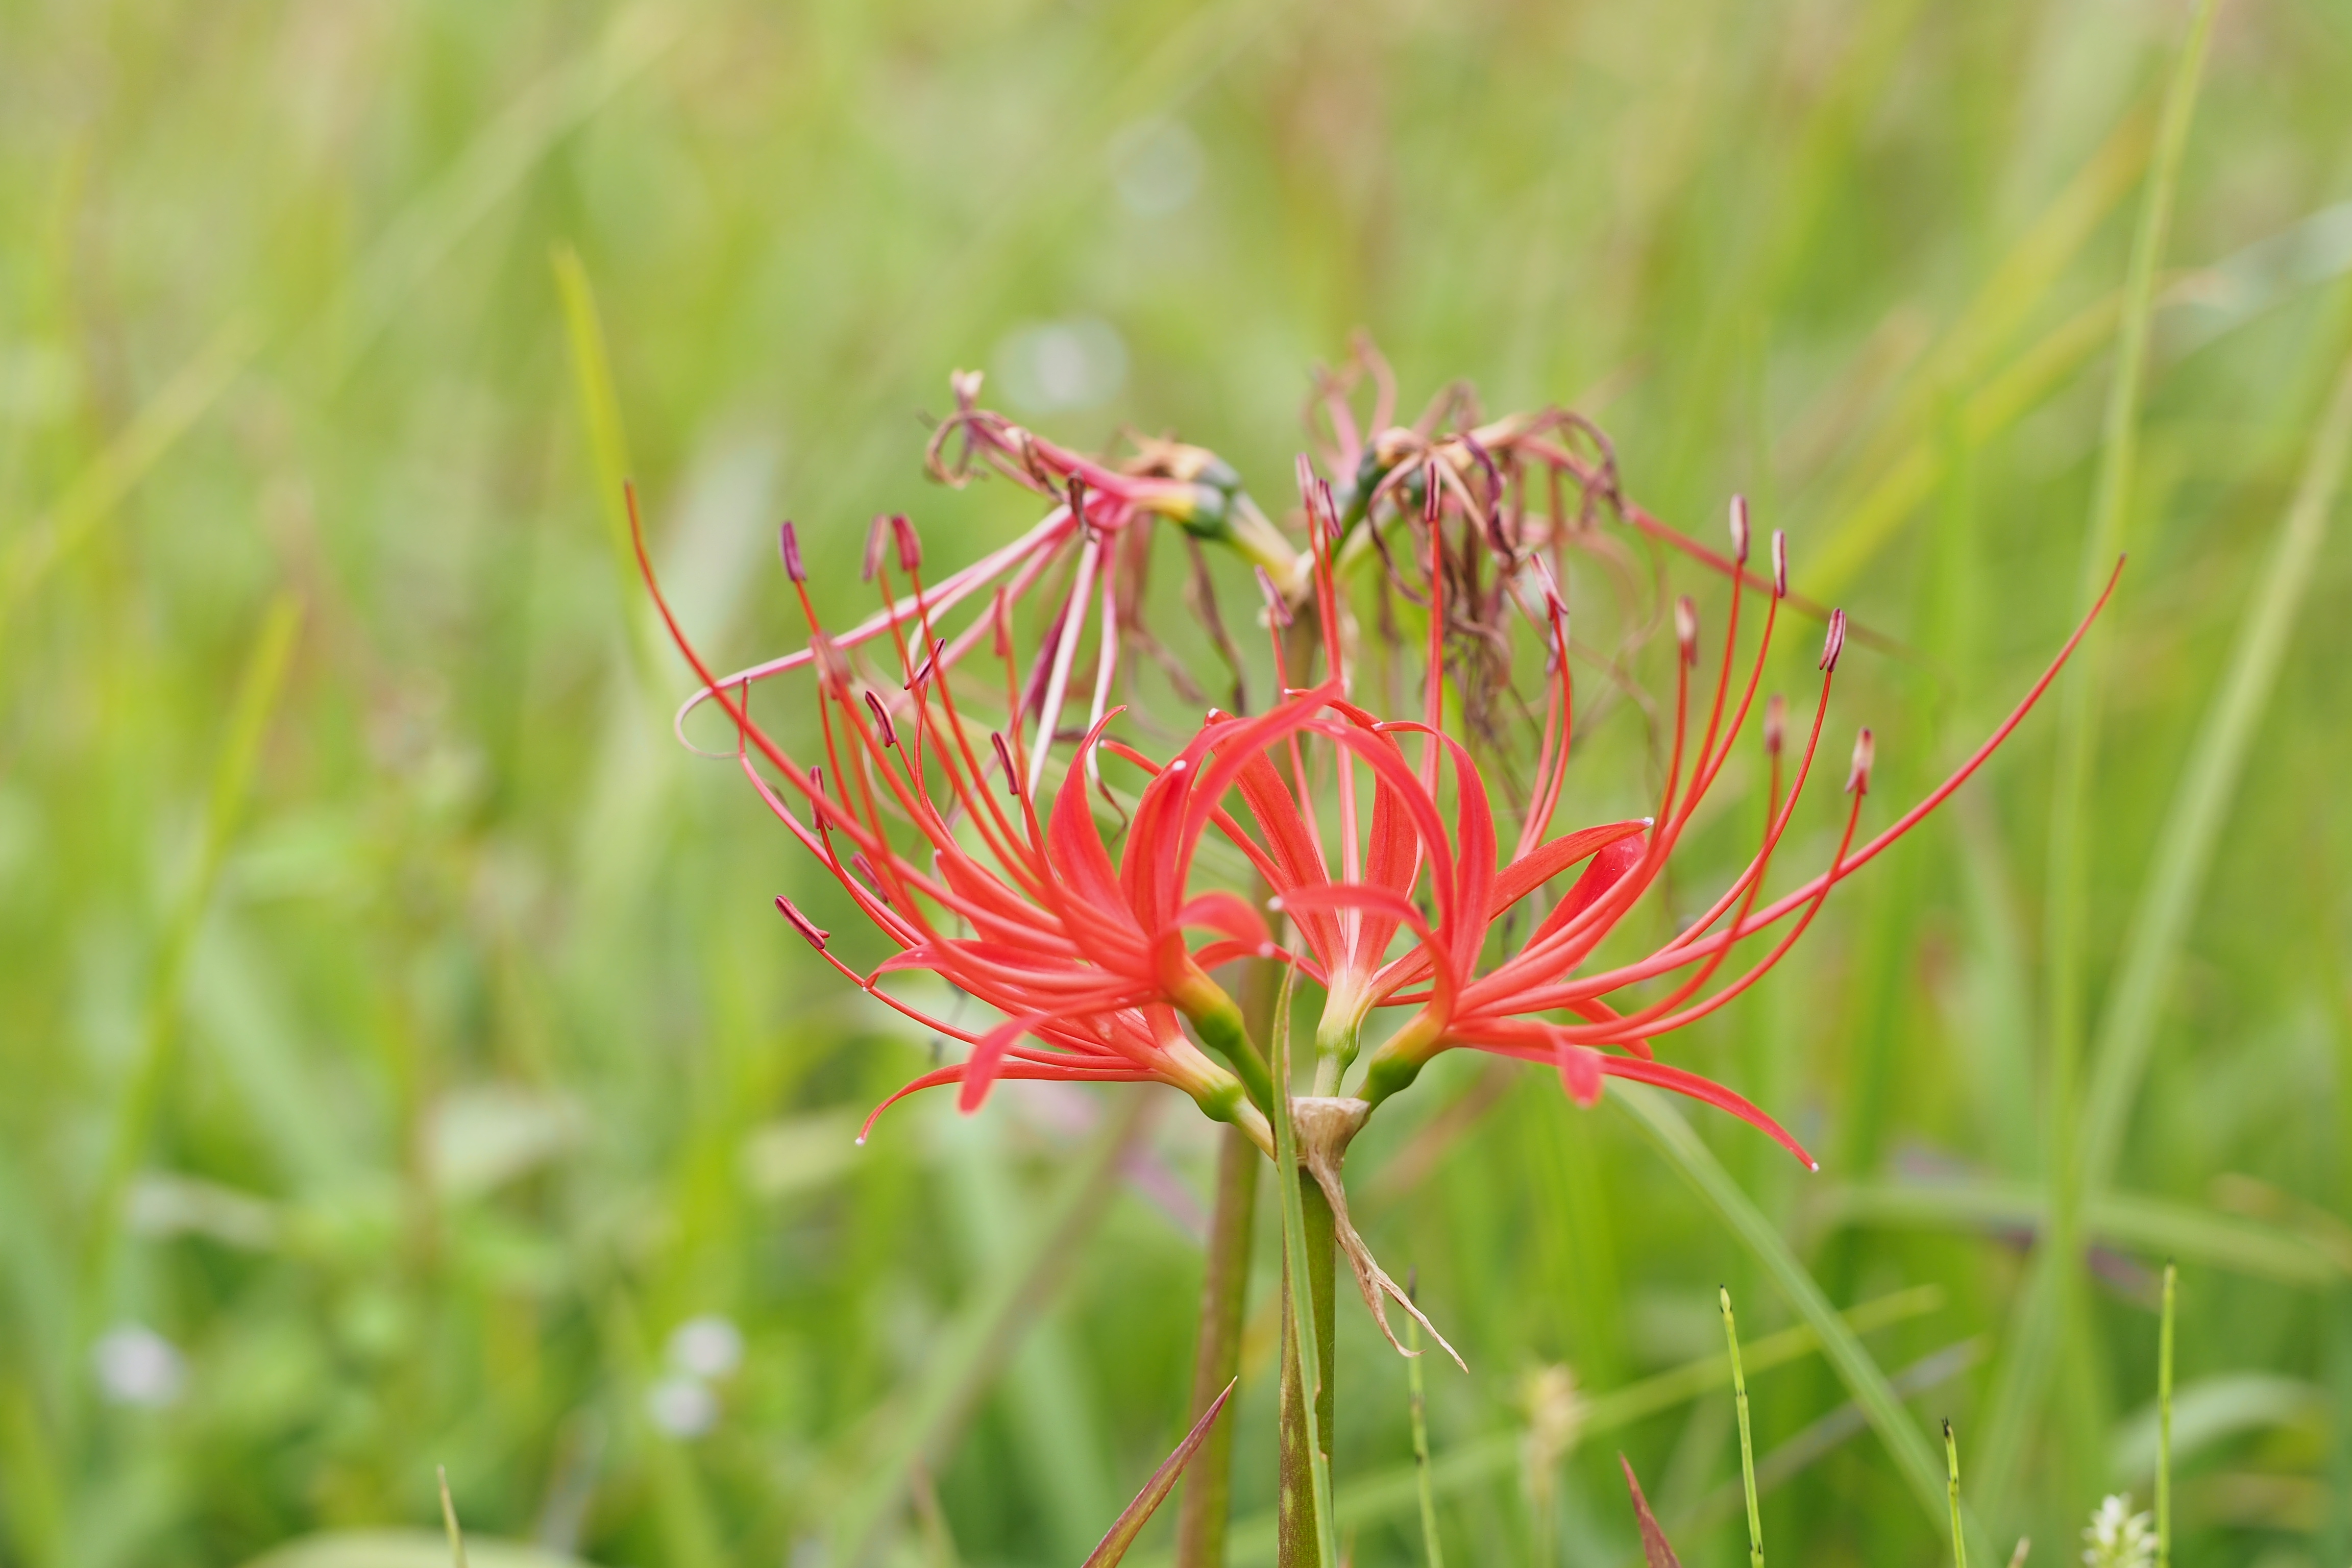 Ред спайдер. Lycoris uydoënsis. Red Spider Lily. Красная Паучья линия. Indian Red Spider.